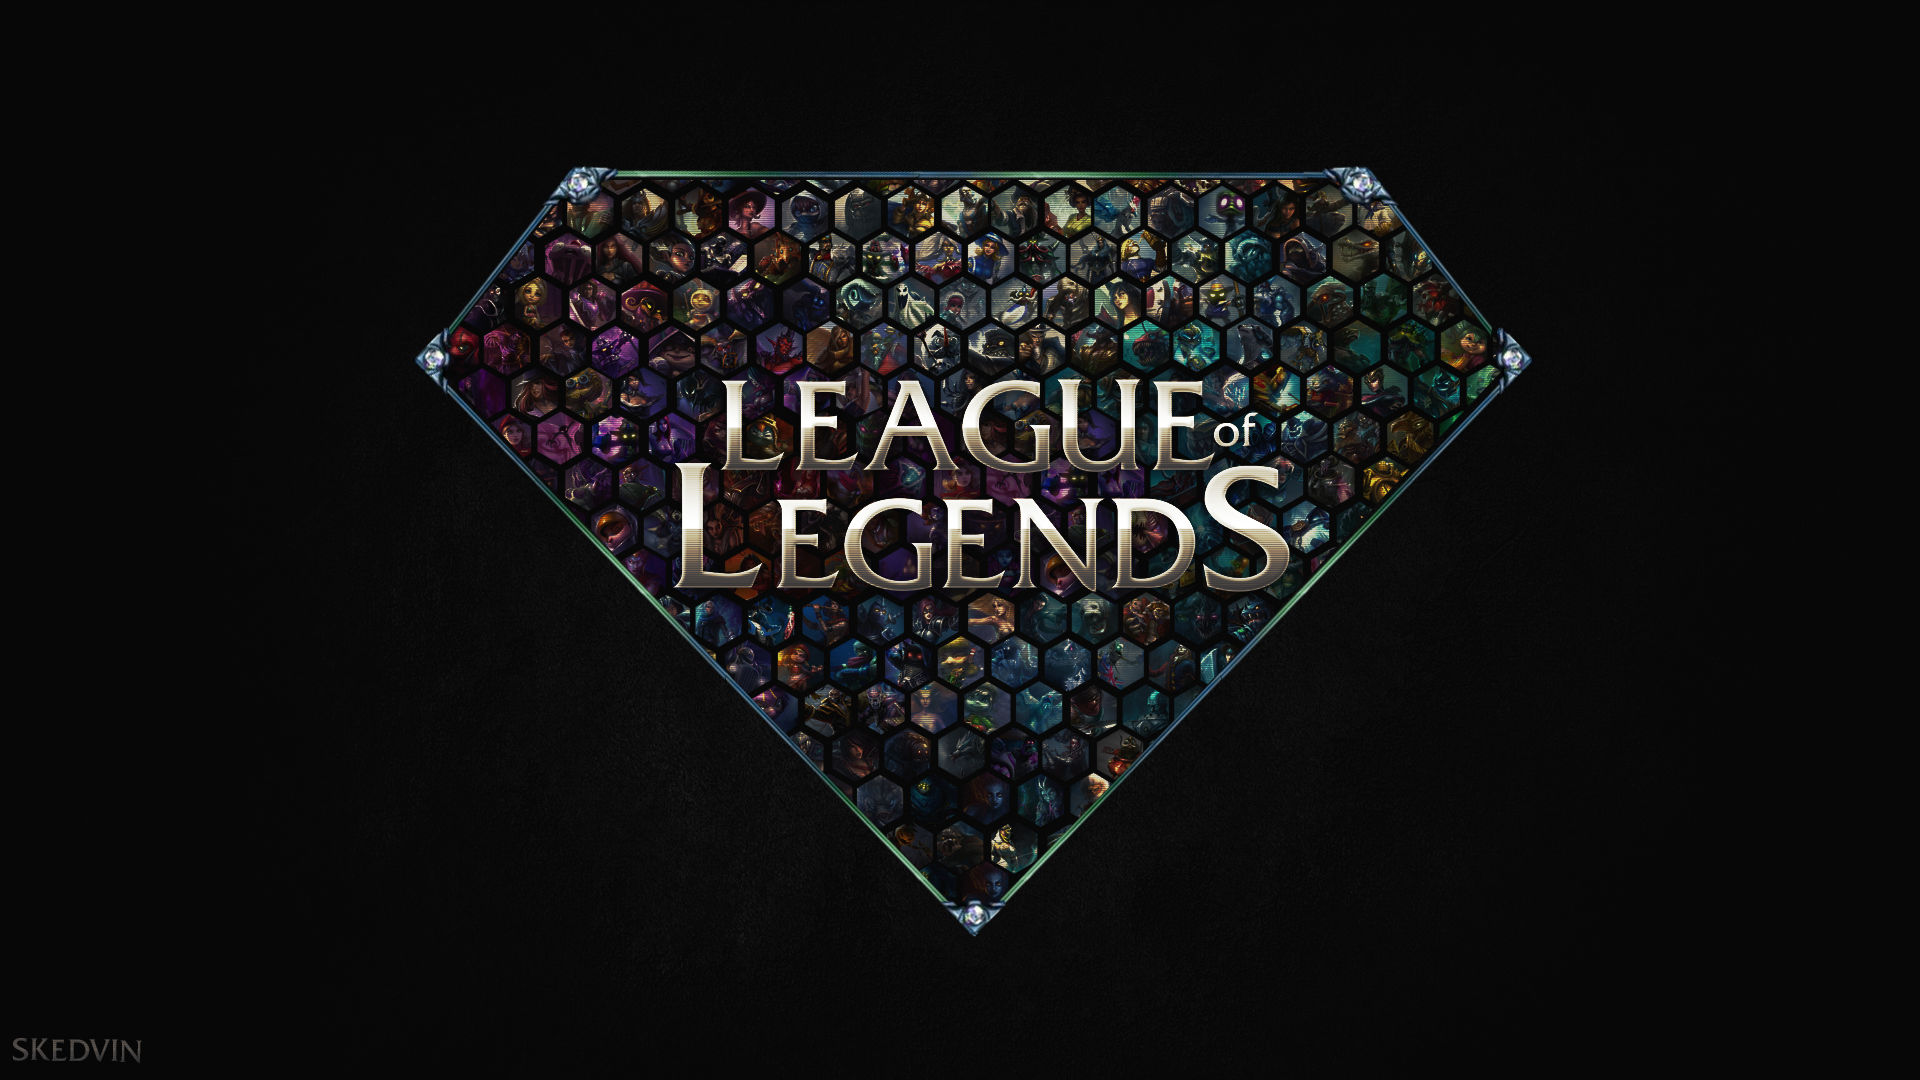 League of Legends wallpaper 19201080p HD by SKEDVIN on DeviantArt